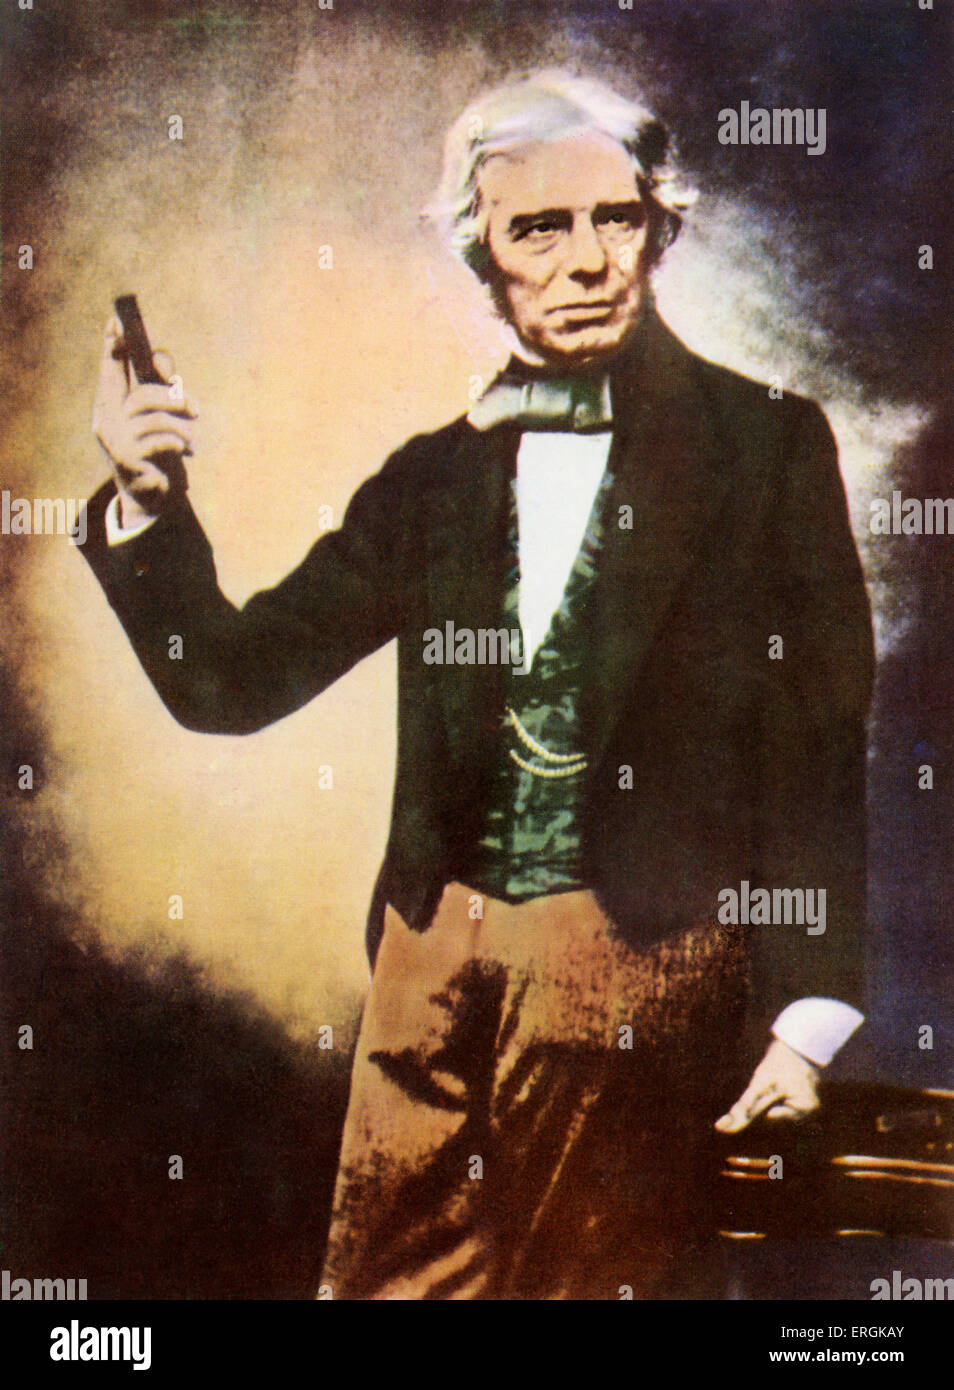 Michael Faraday (1791-1867). Michael Faraday experimentierte im Bereich des Elektromagnetismus. Bildunterschrift lautet: "Michael Faraday". Stockfoto